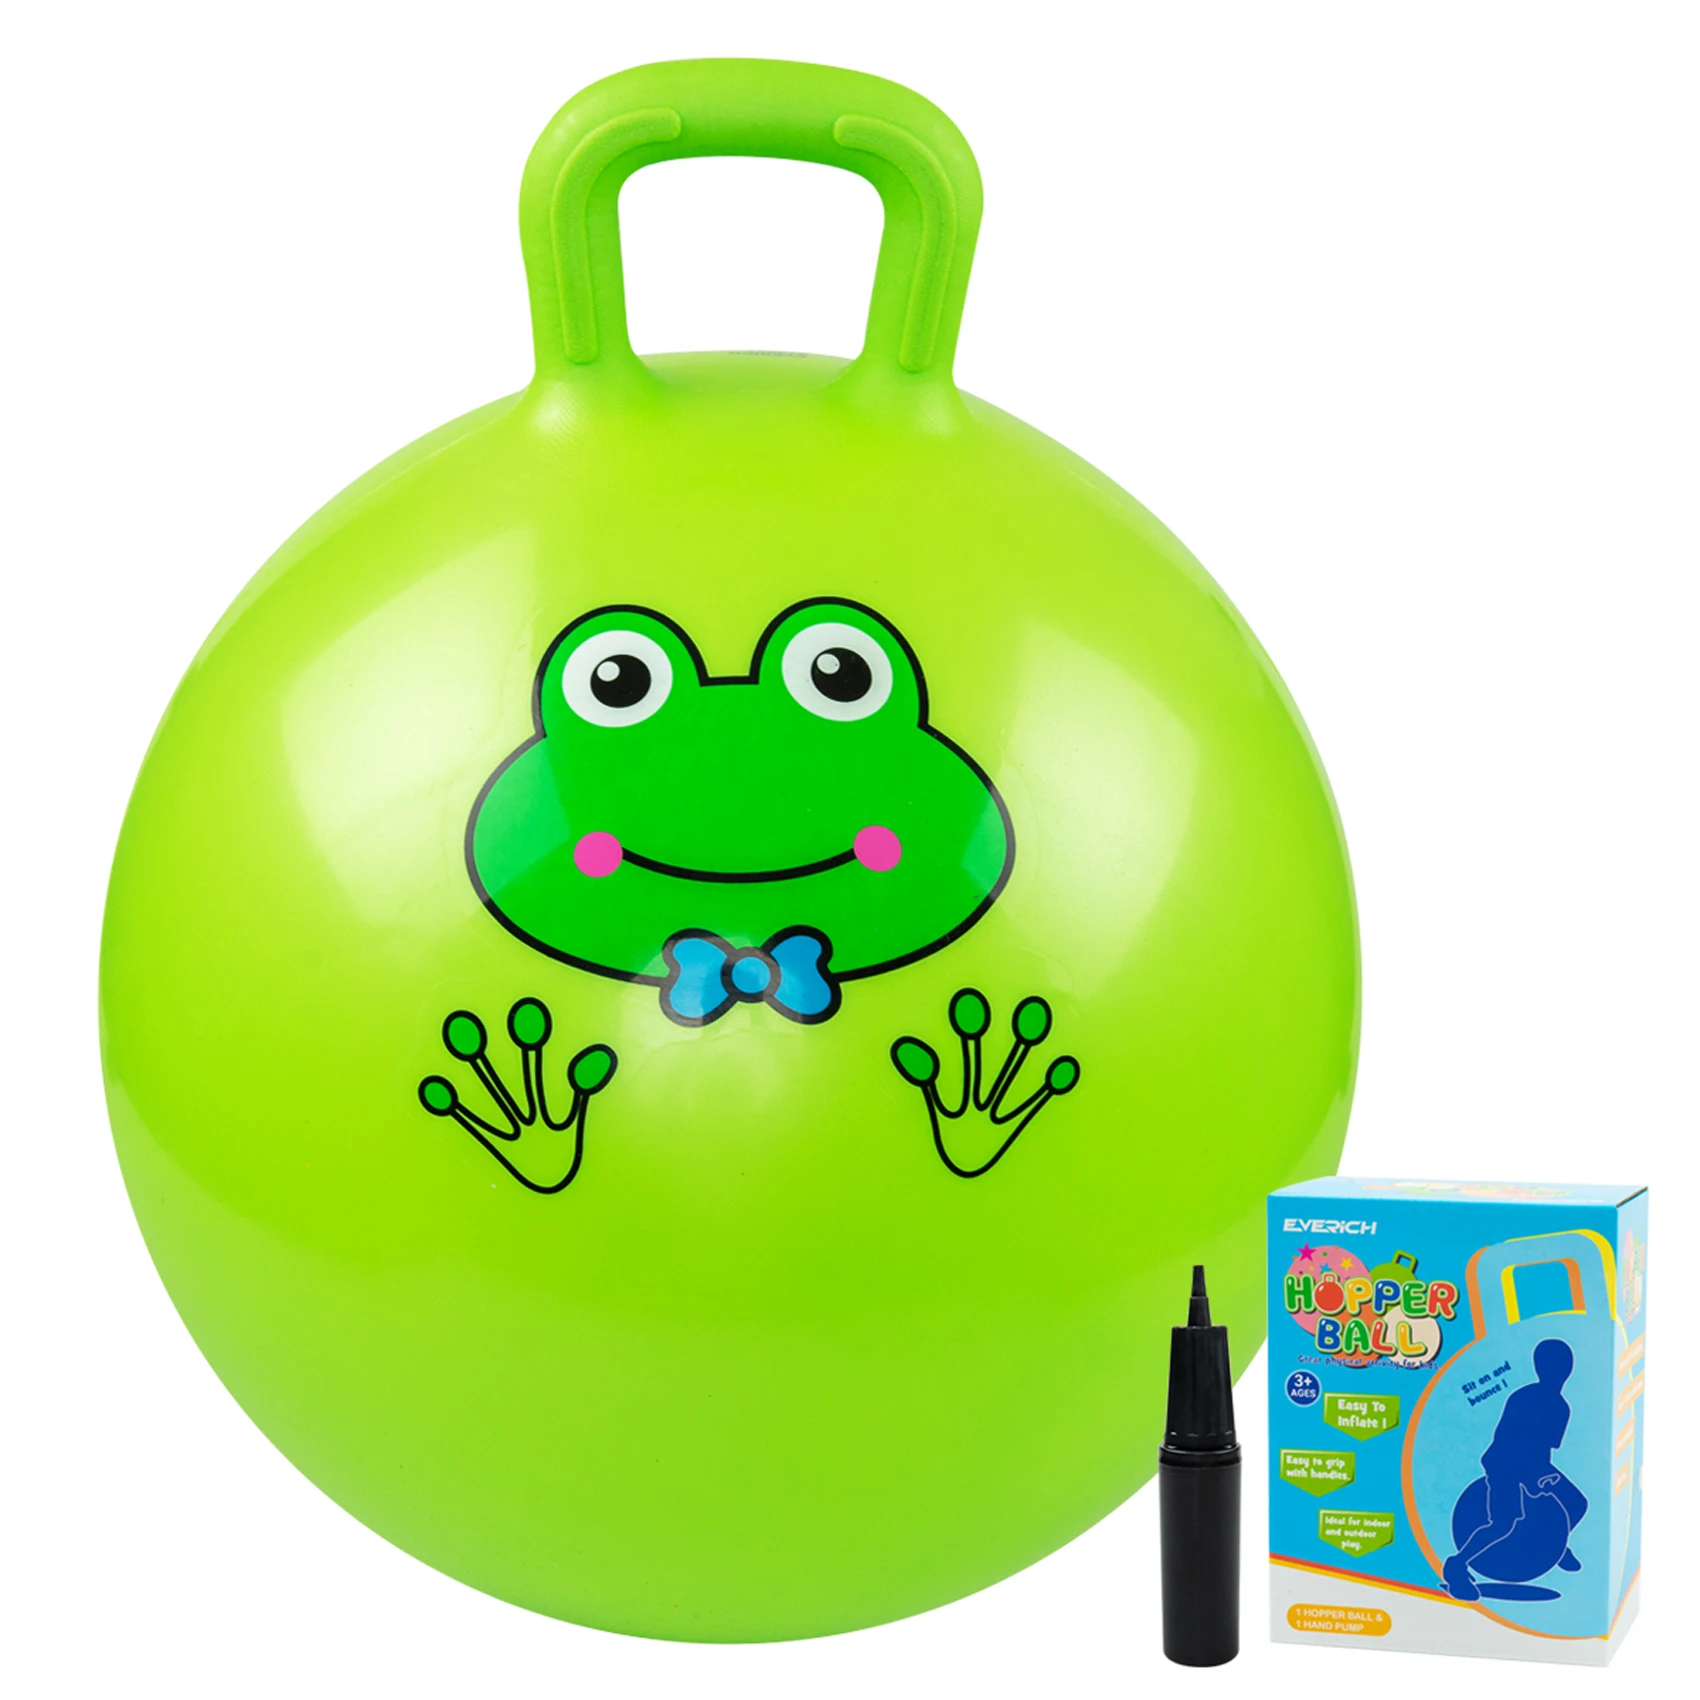 

2023 New Factory Direct Jumping Hopper Ball for children green color rubber bouncy ball jumping ball